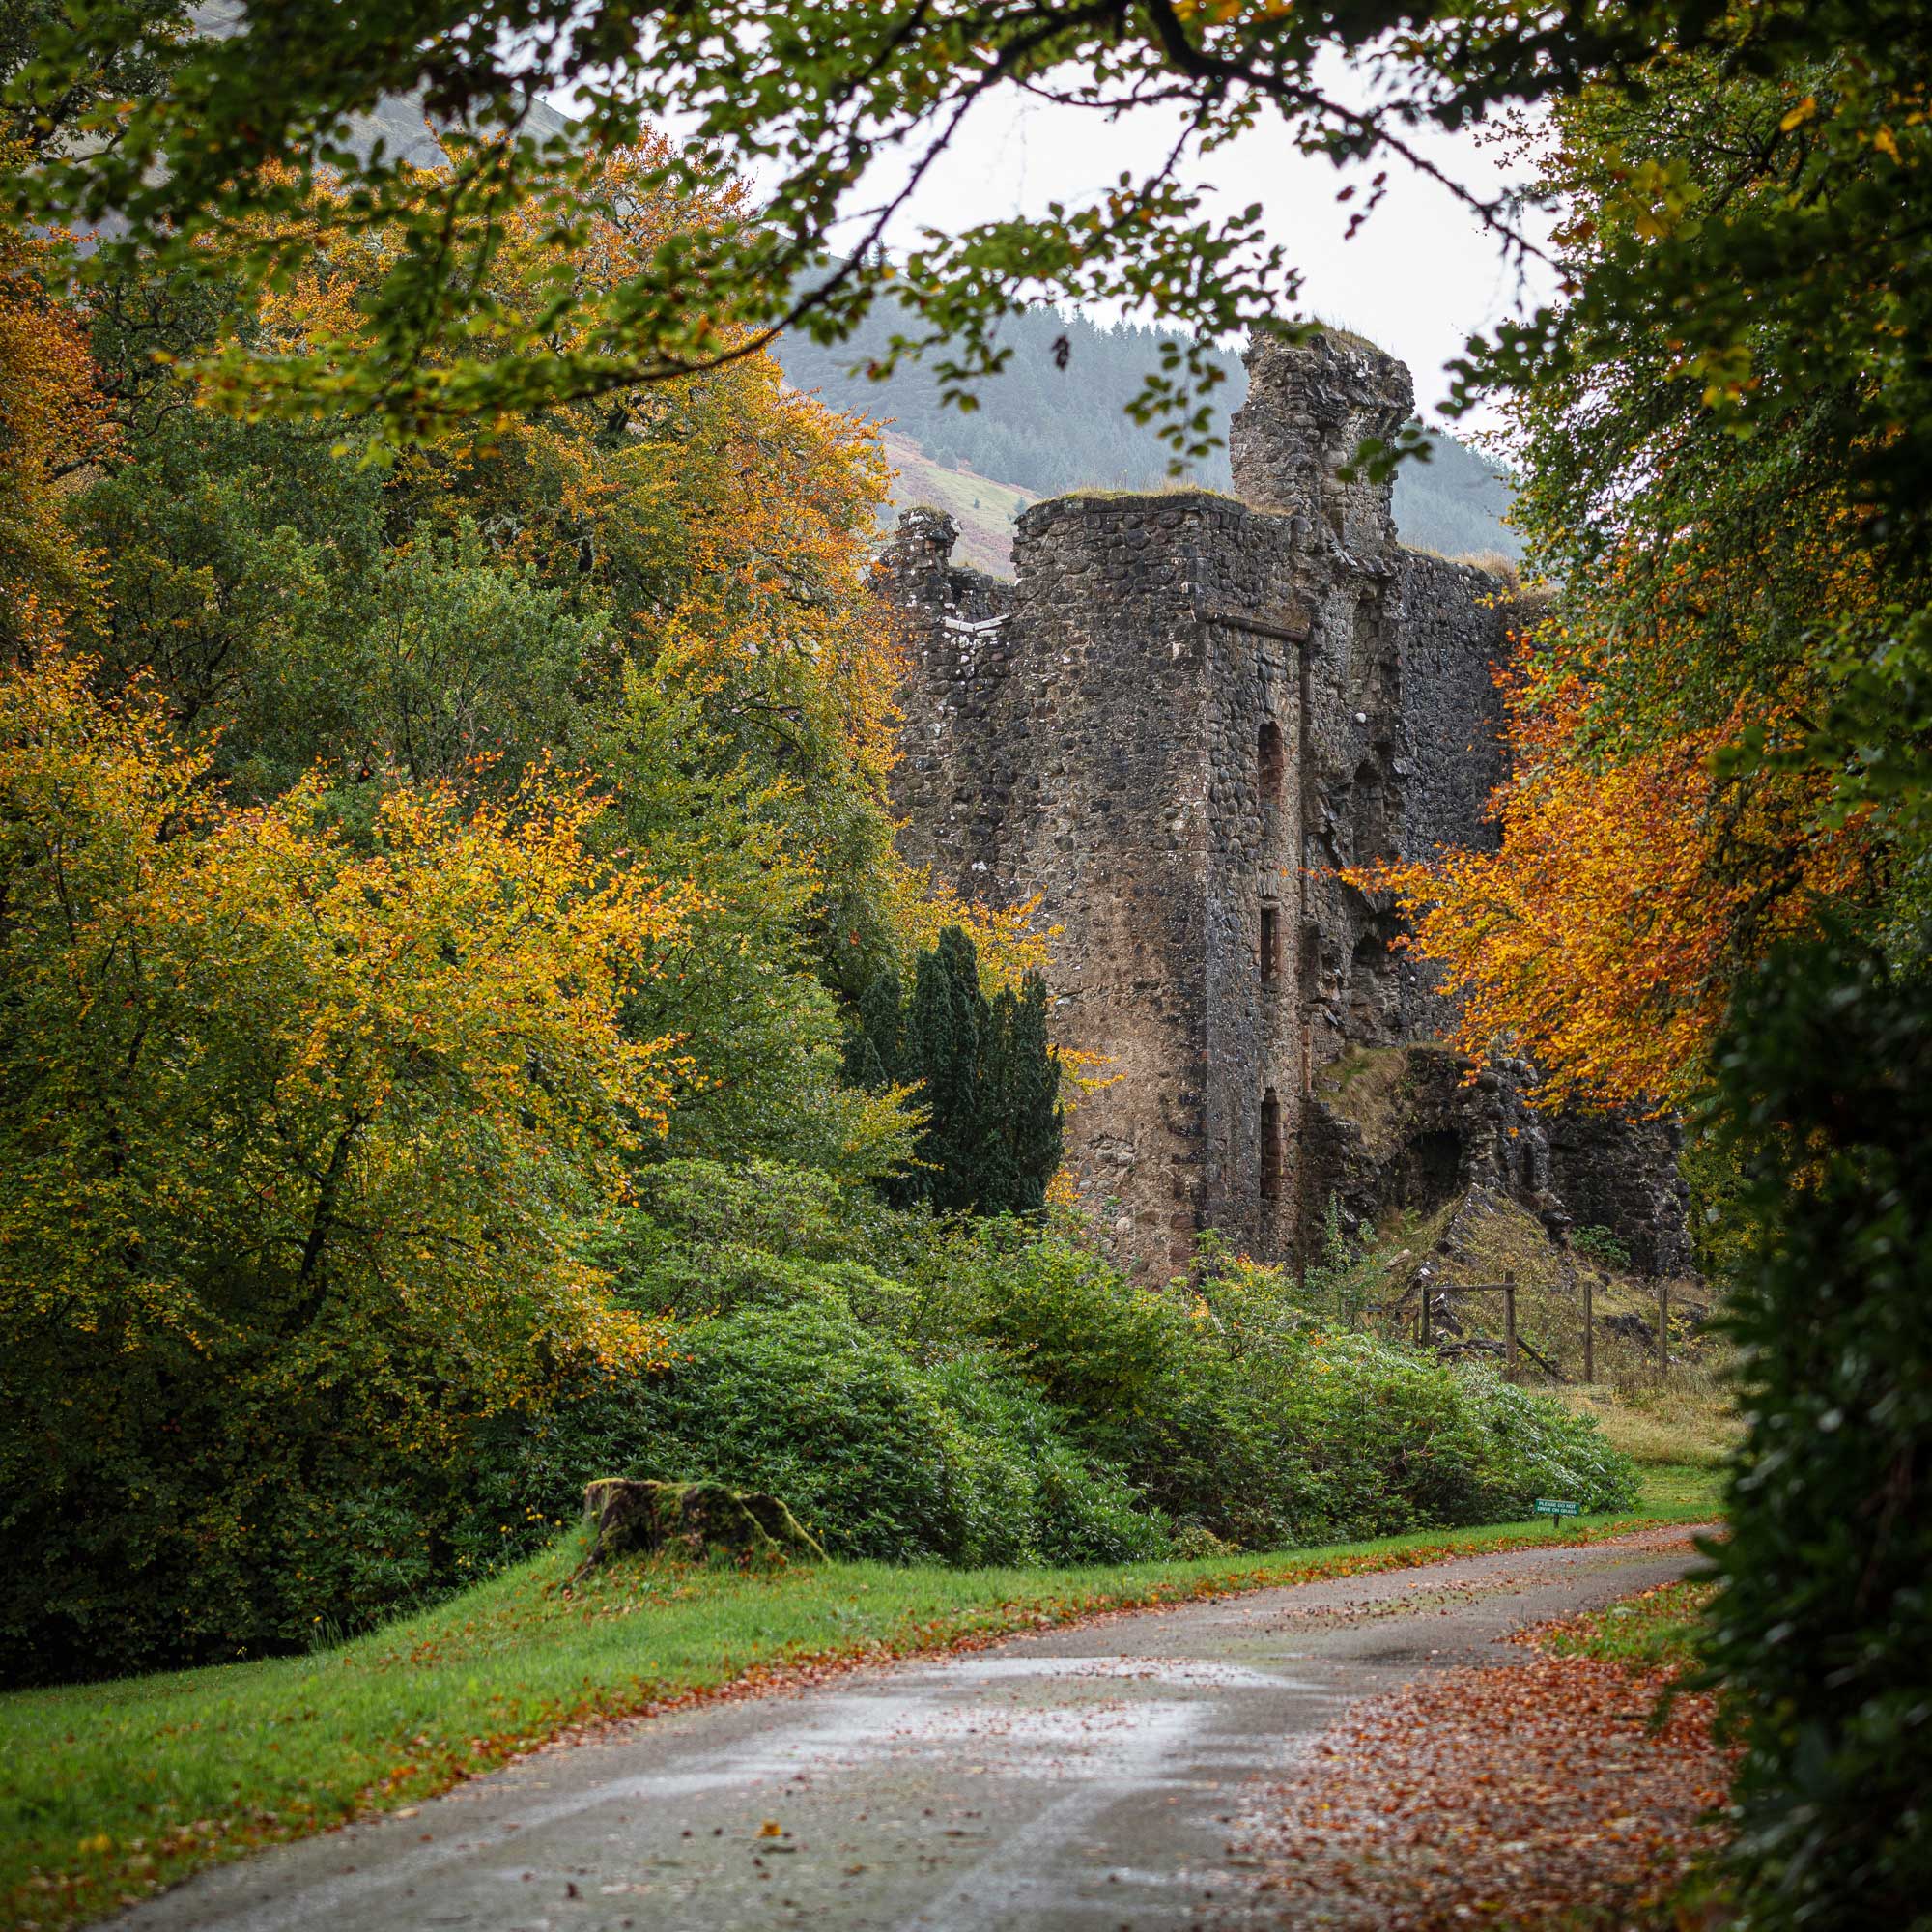 The ruin of Invergarry Castle